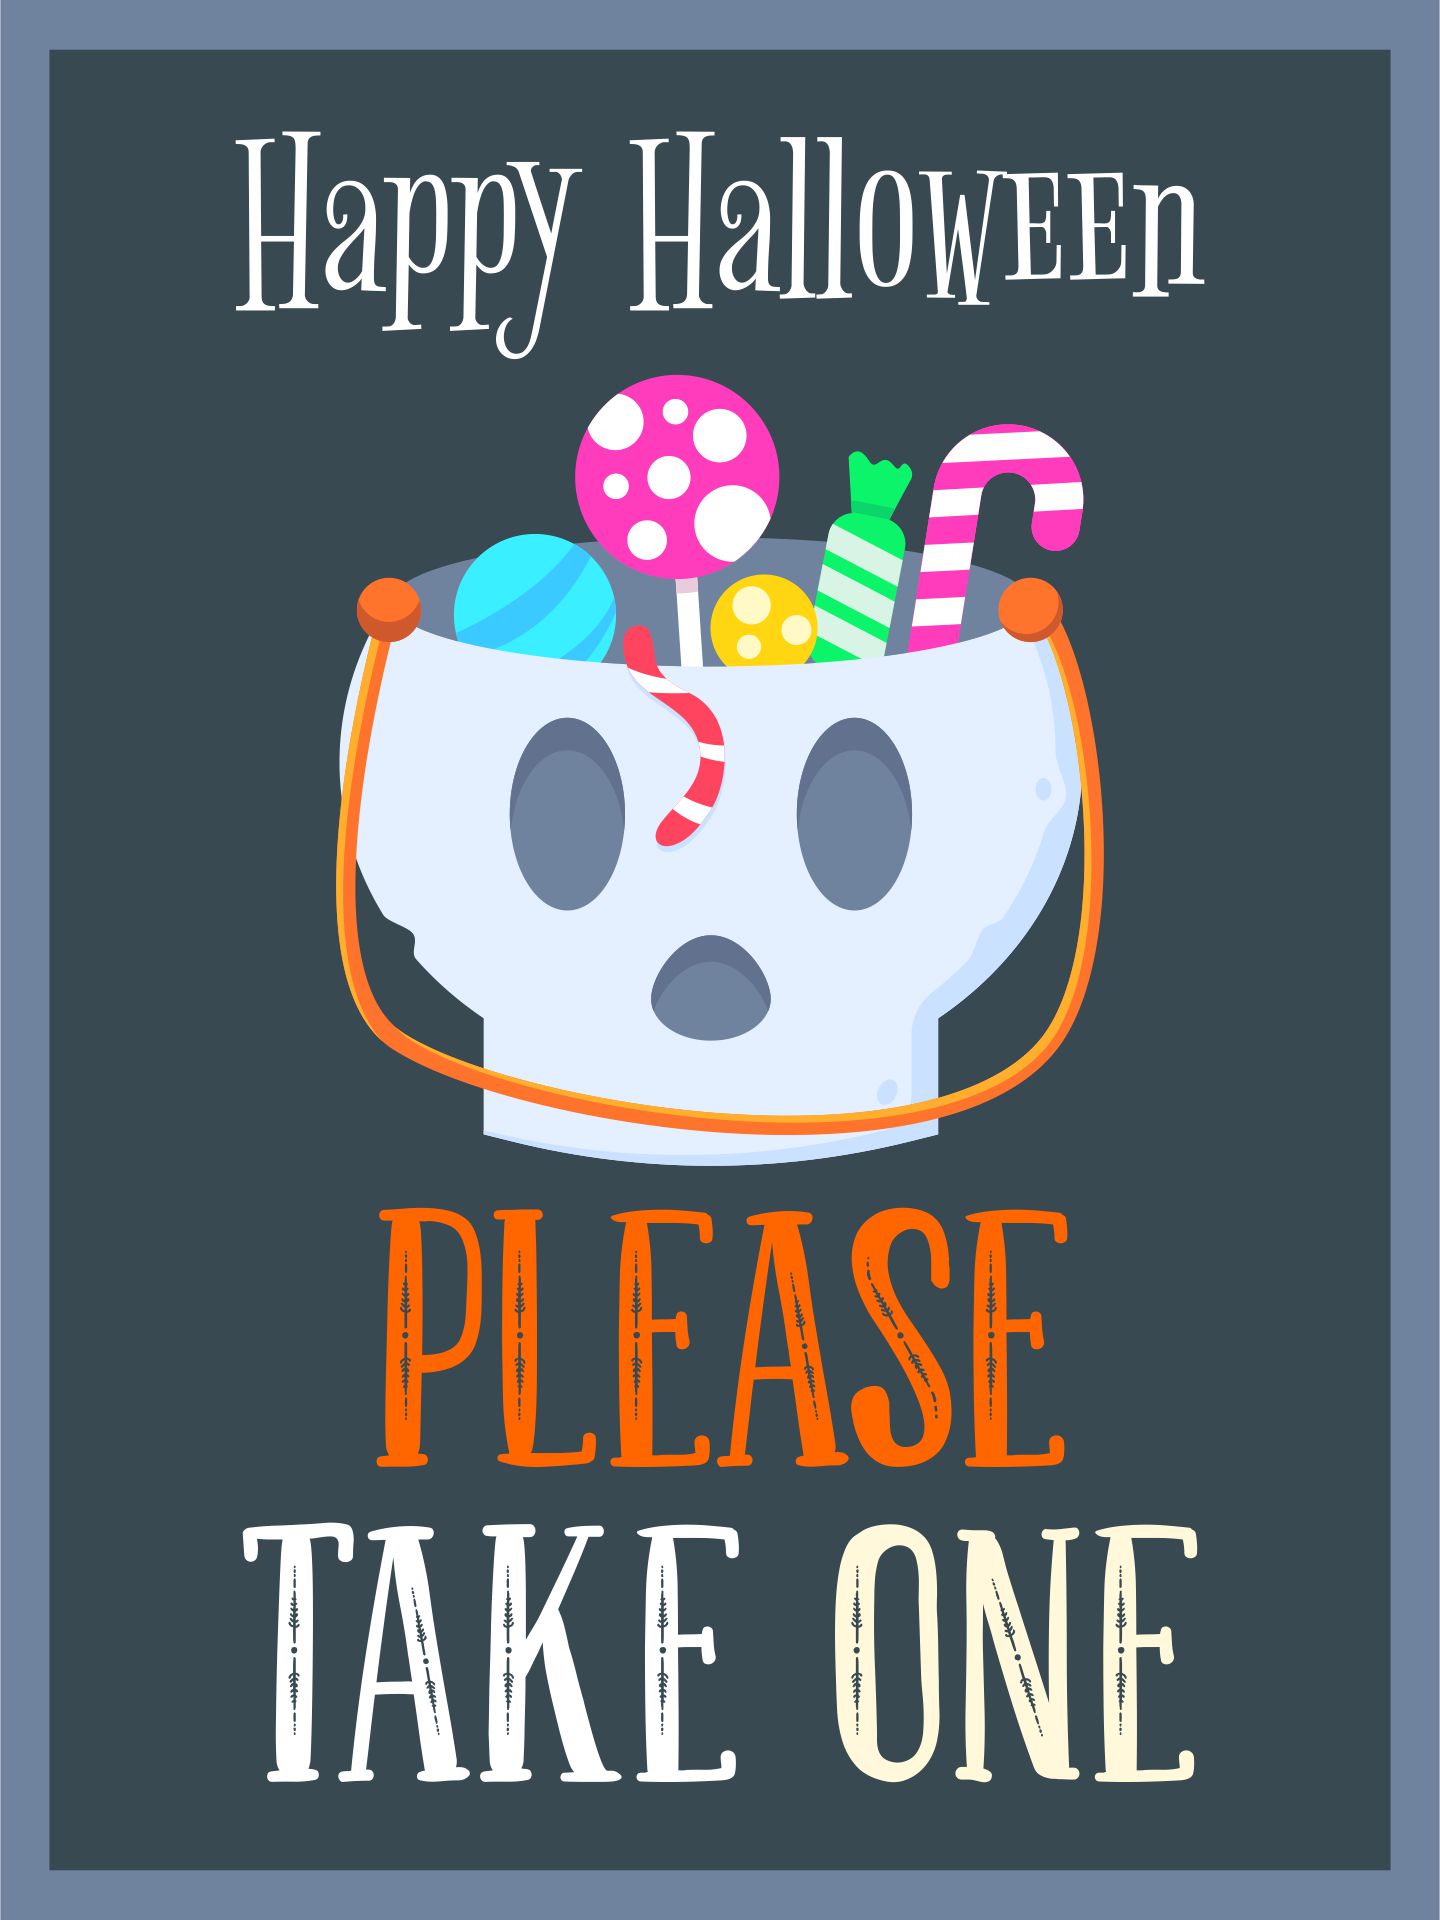 Printable Please Take One Halloween Sign